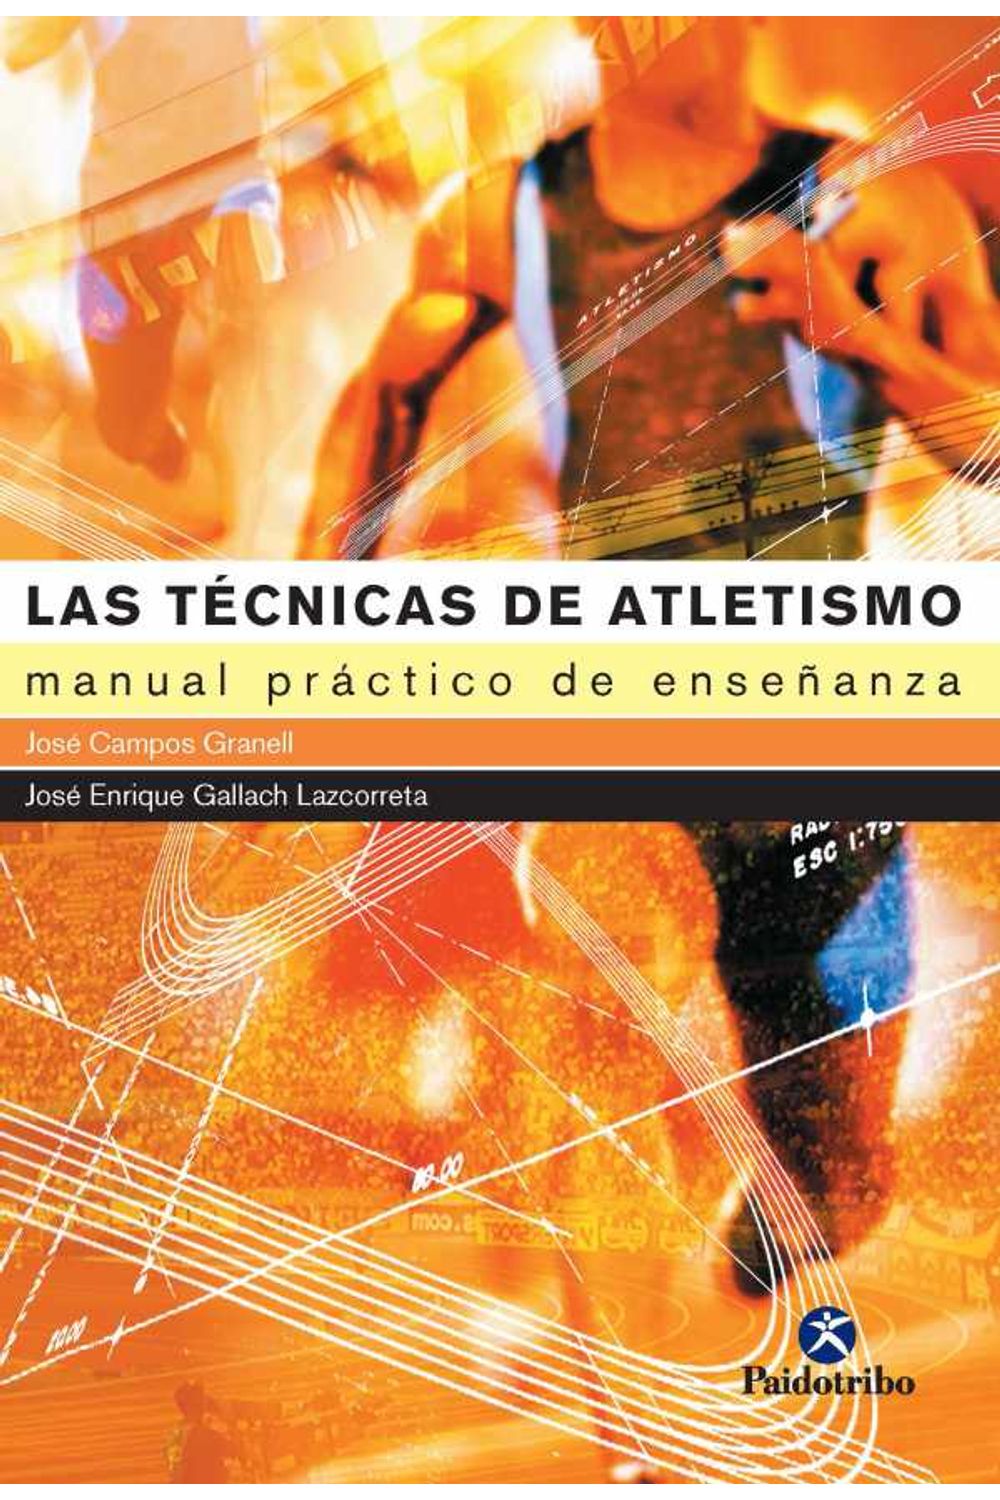 bw-las-teacutecnicas-de-atletismo-paidotribo-9788499108049